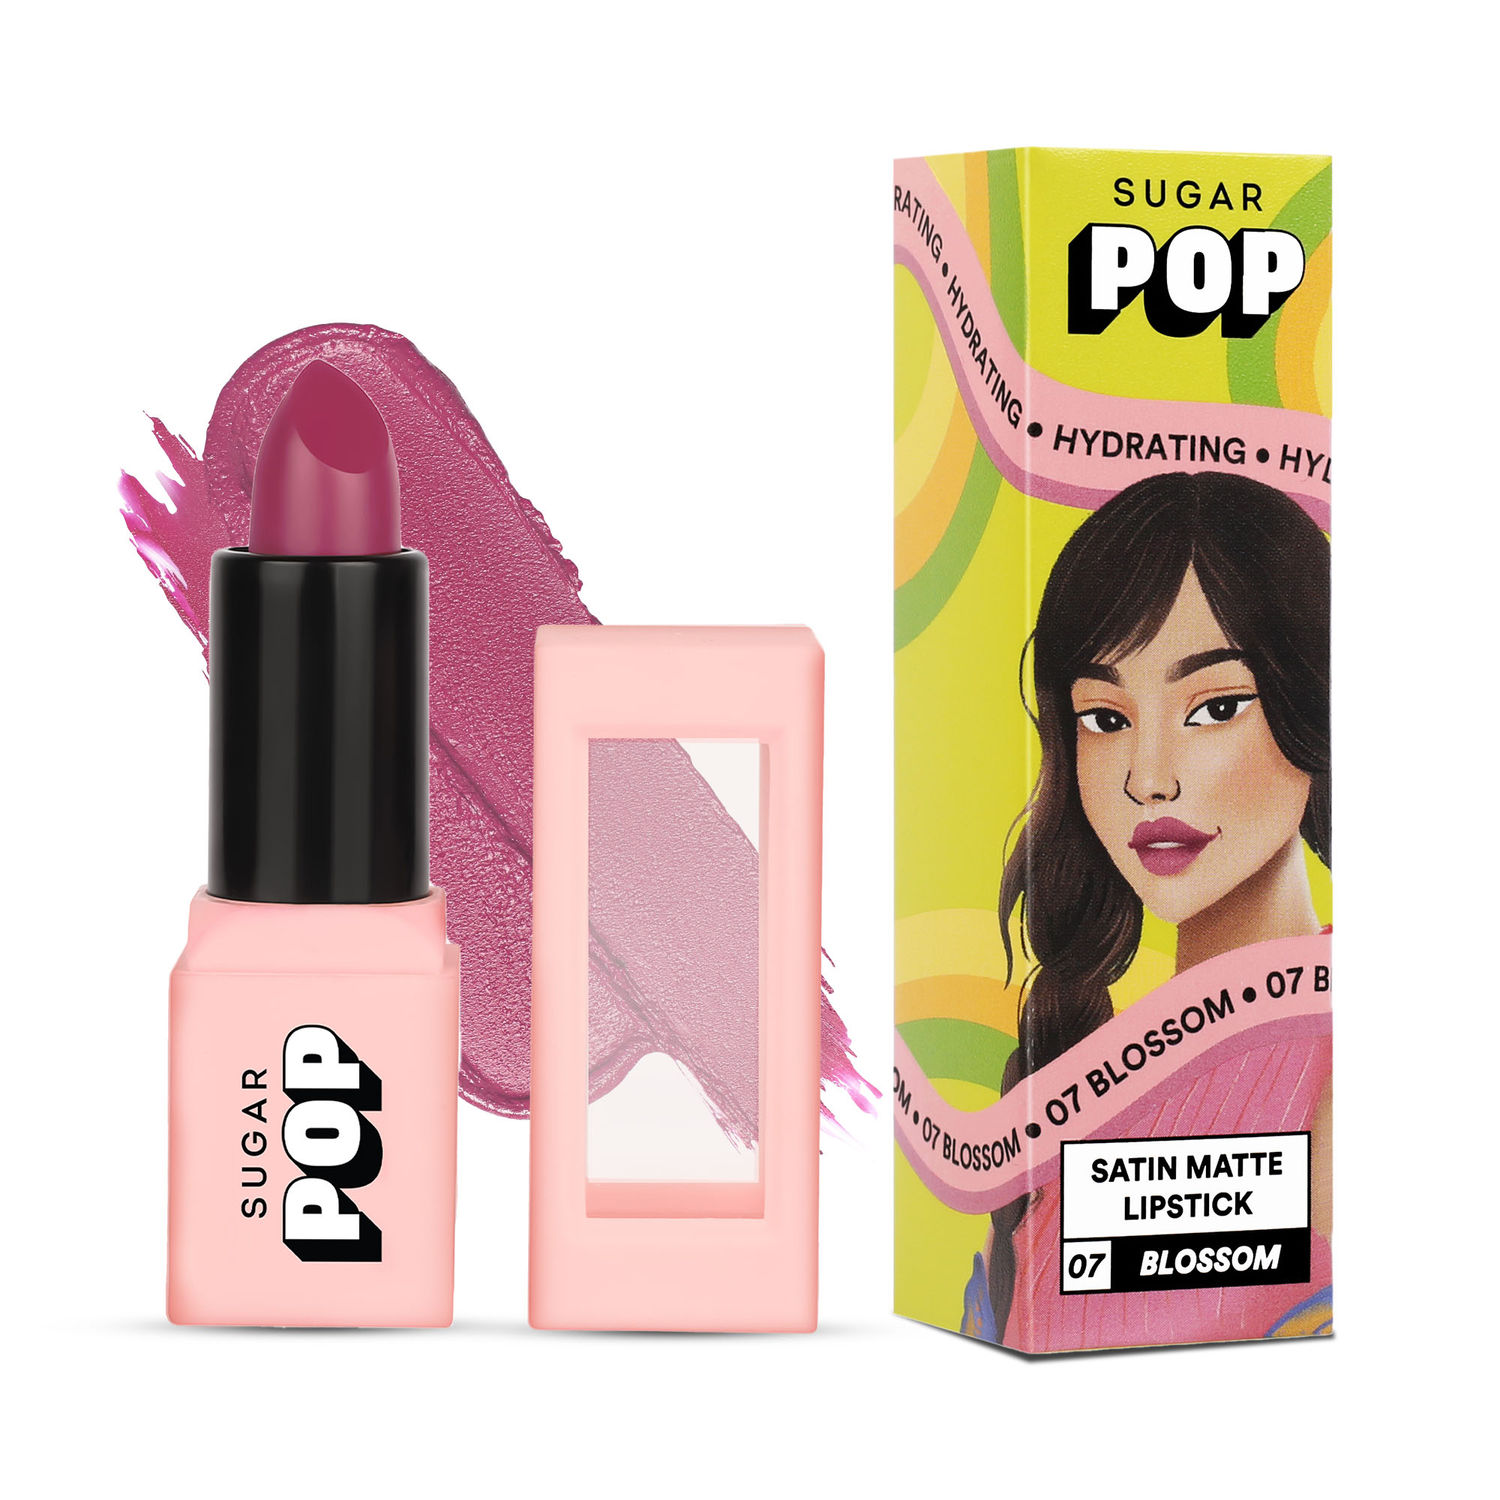 SUGAR POP Satin Matte Lipstick - 07 Blossom (Light Pink) - 3 gm ...